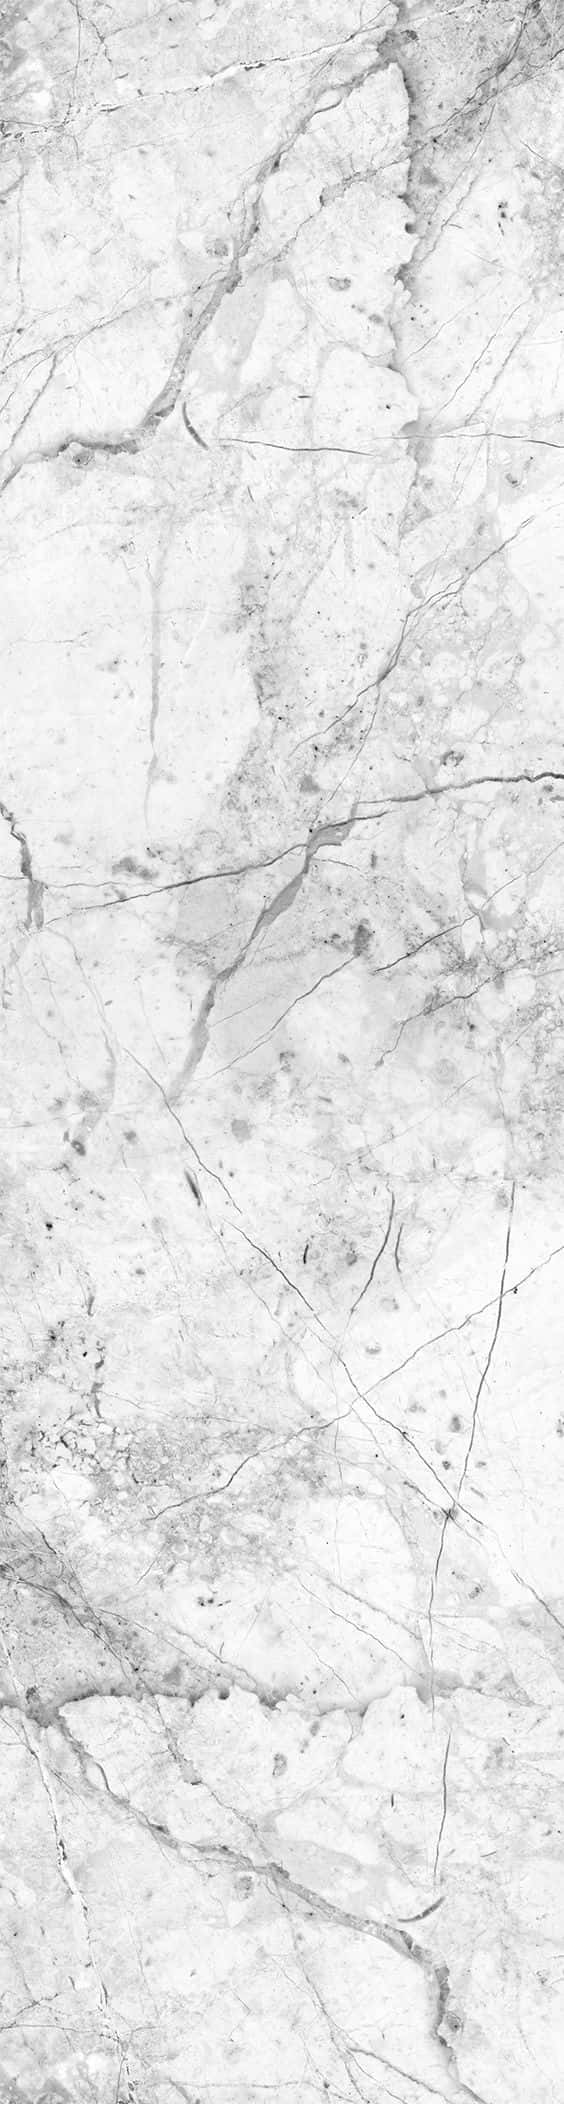 Marble Texture White Granite Portrait Digital Art Picture